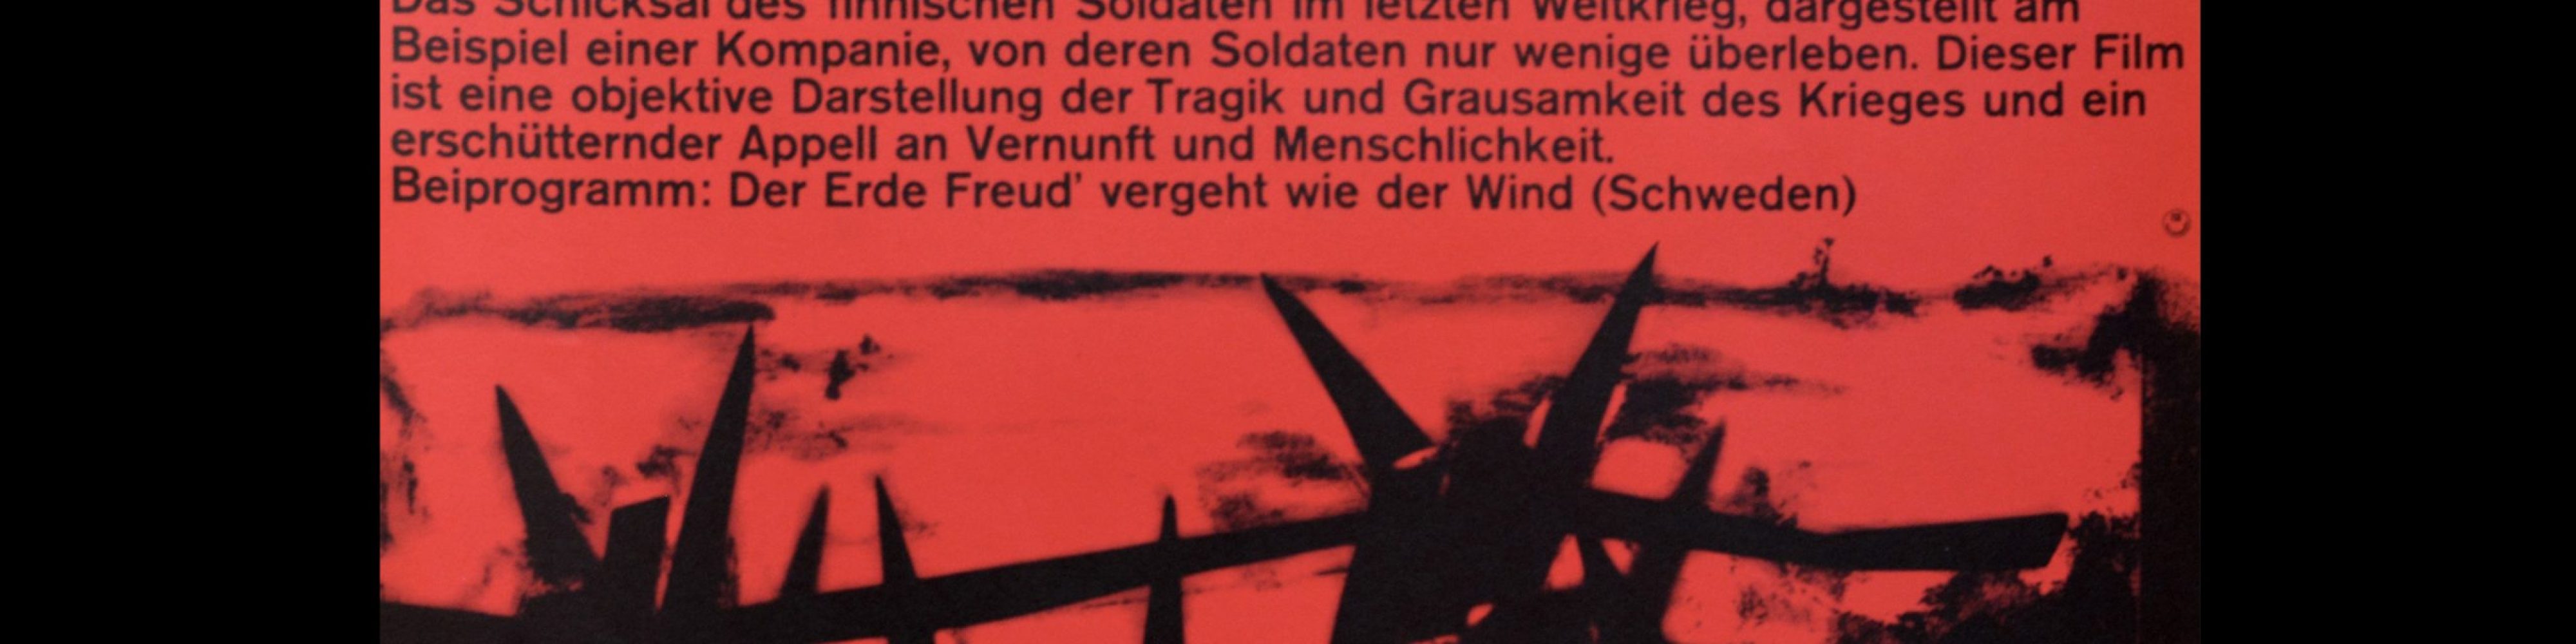 Der Unbekannte Soldat, Atlas Films Poster, 1960s. Designed by Karl Oskar Blase